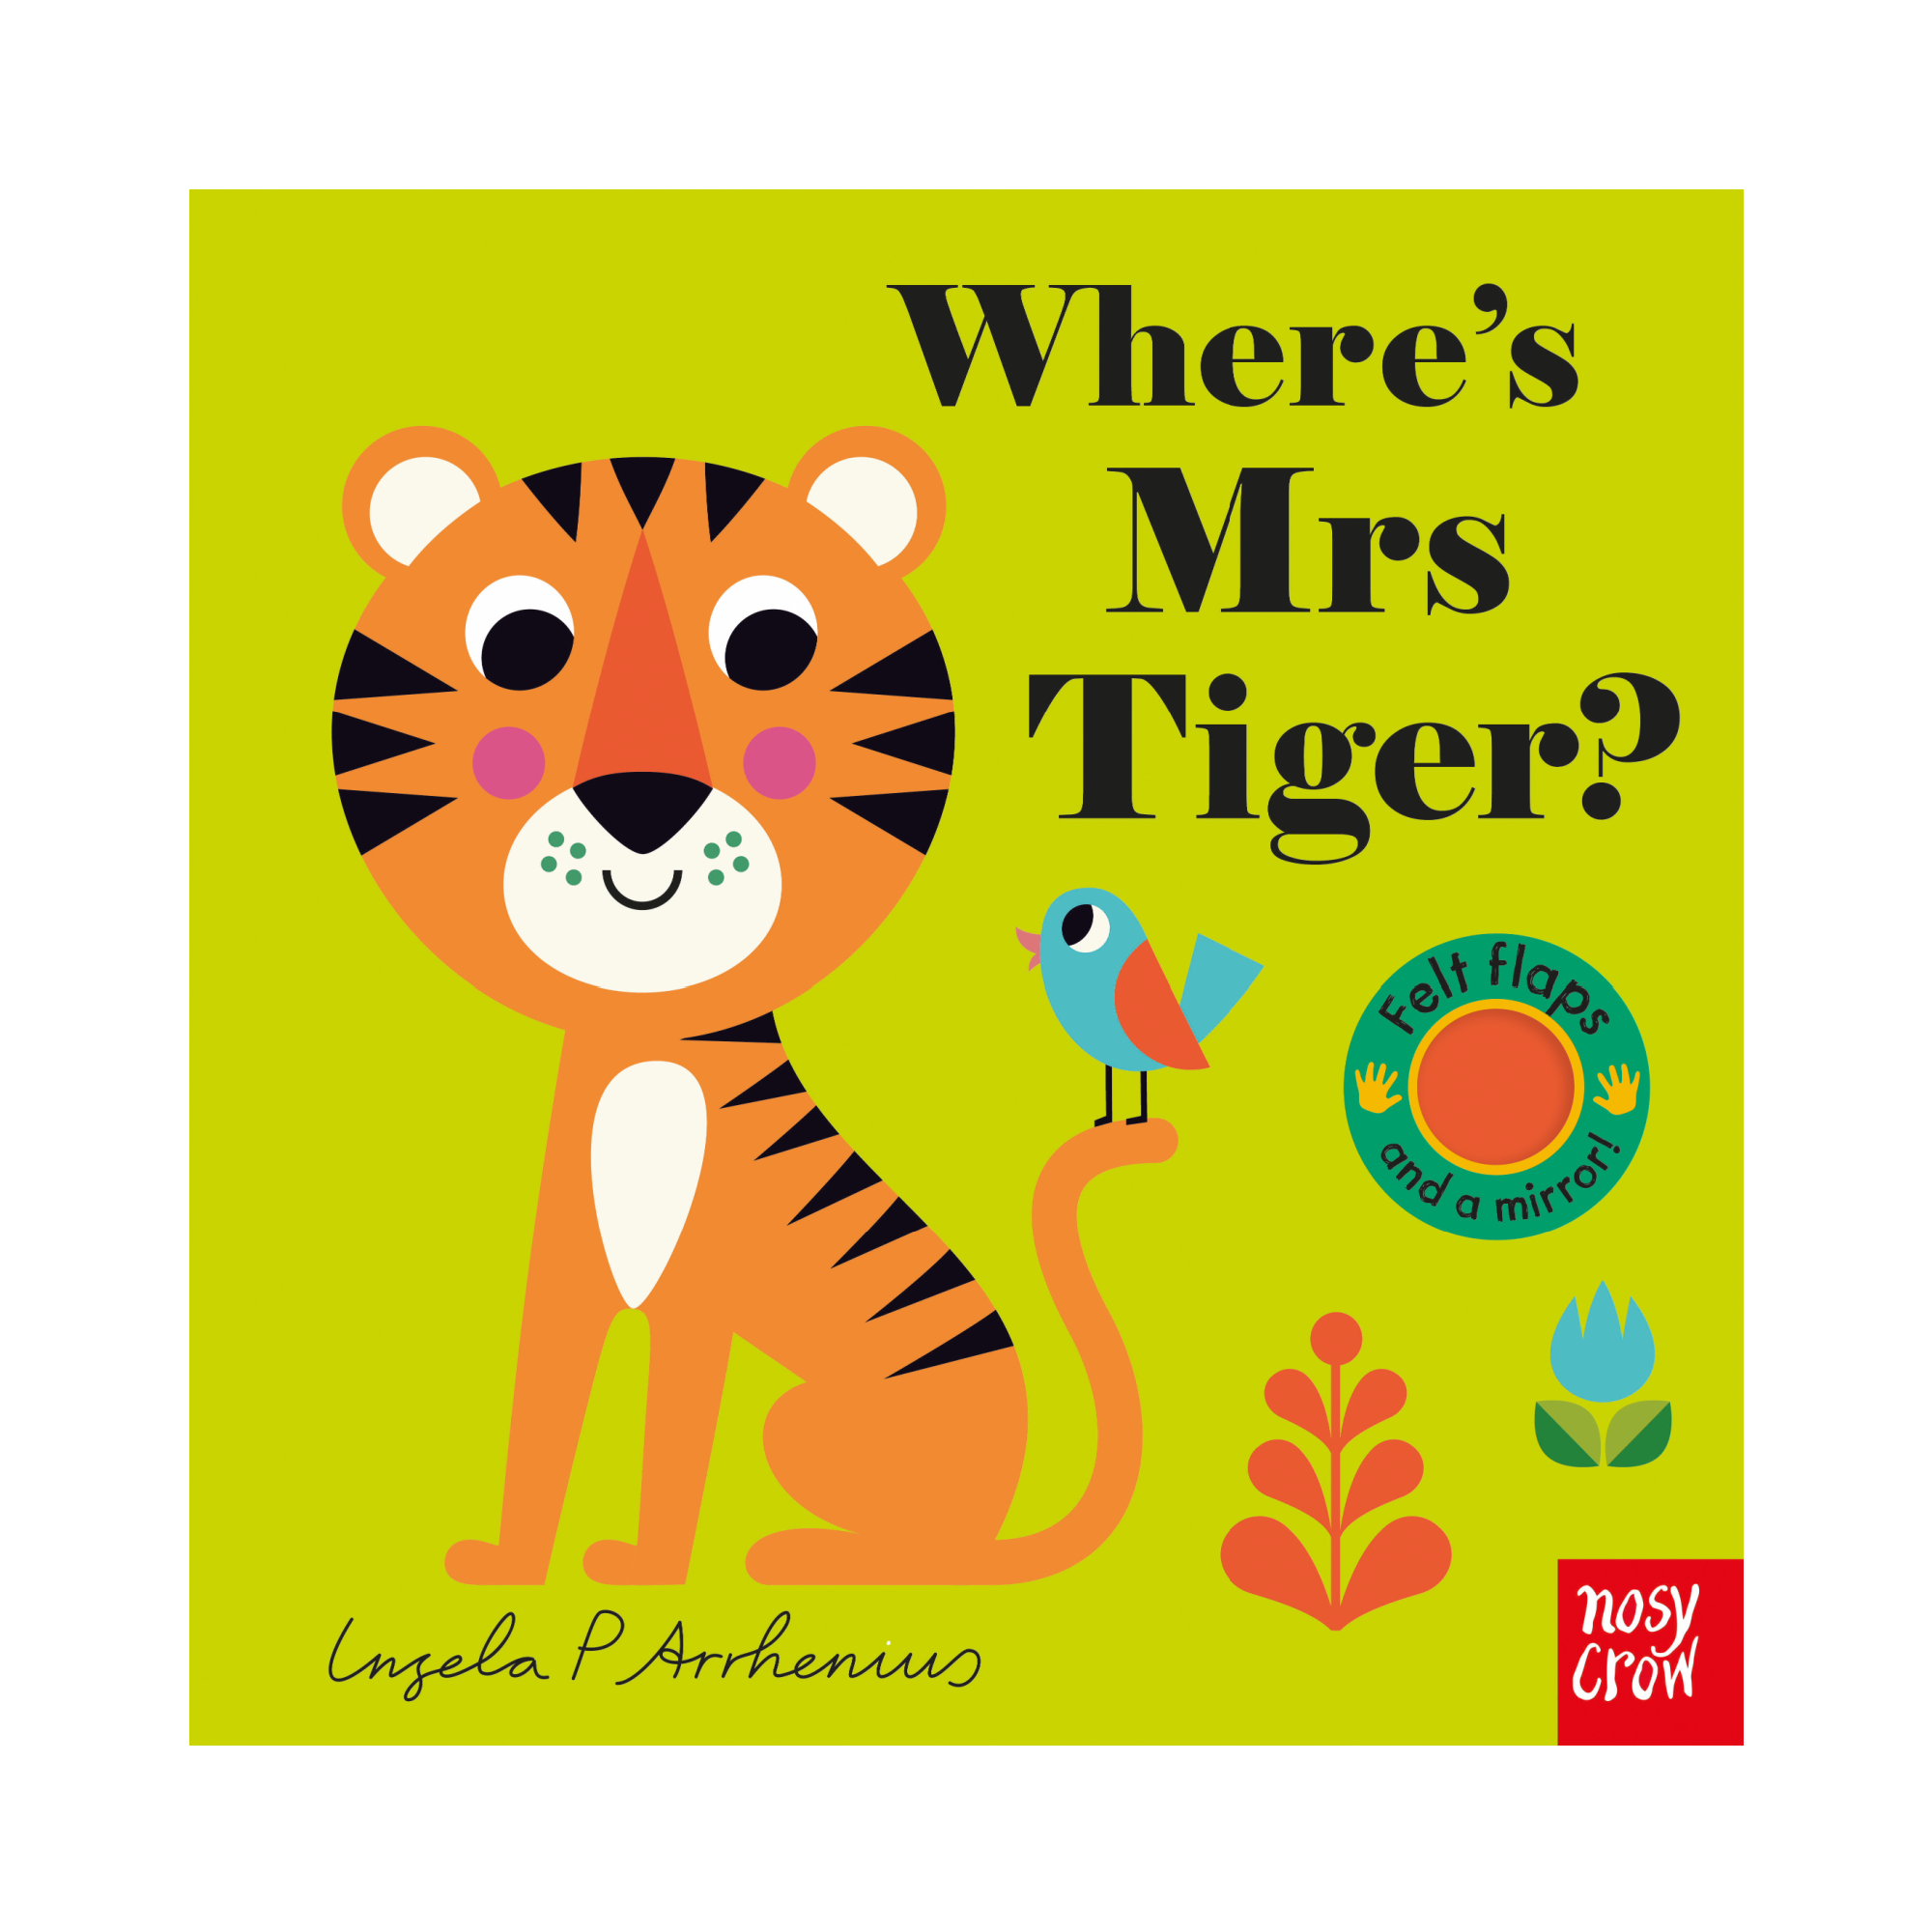 Where's Mrs Tiger?